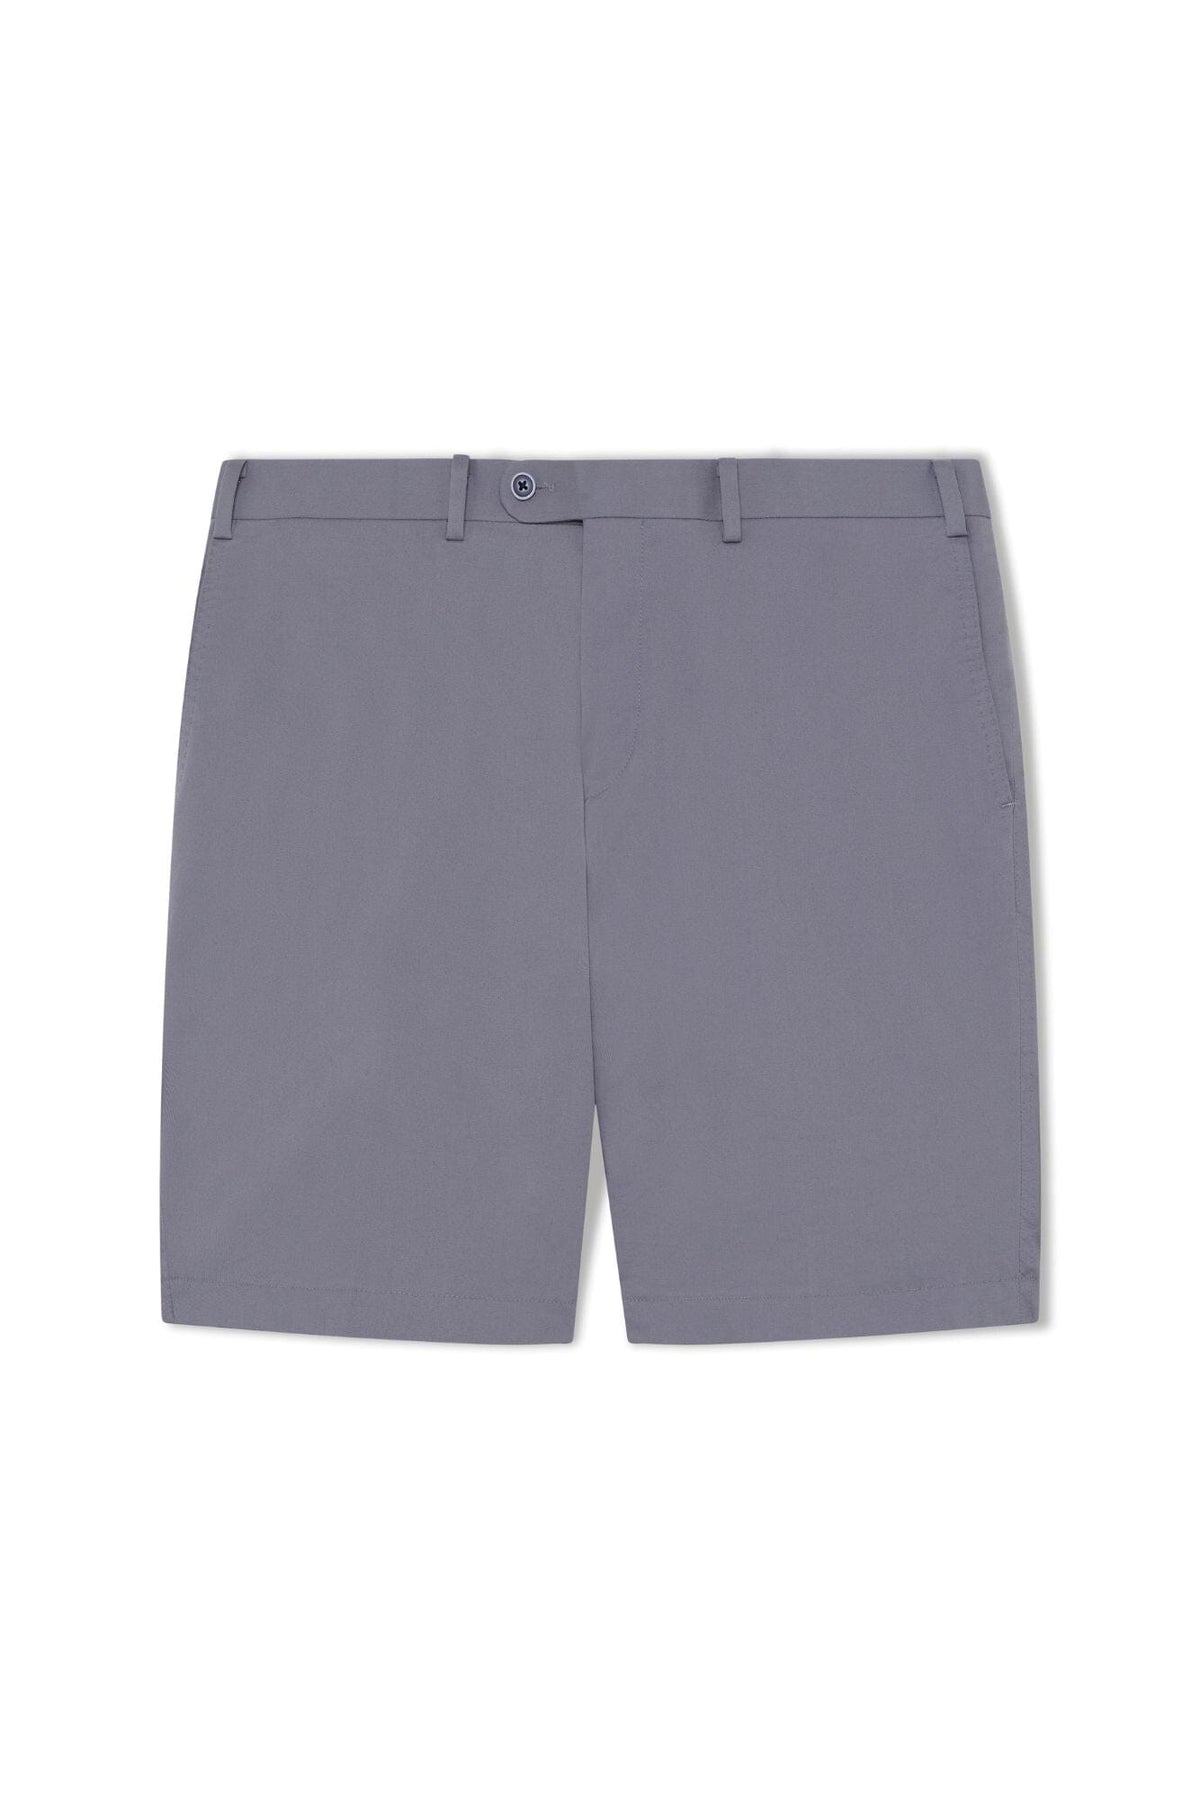 CGC Tailored Shorts - Grey Blue Stretch Cotton